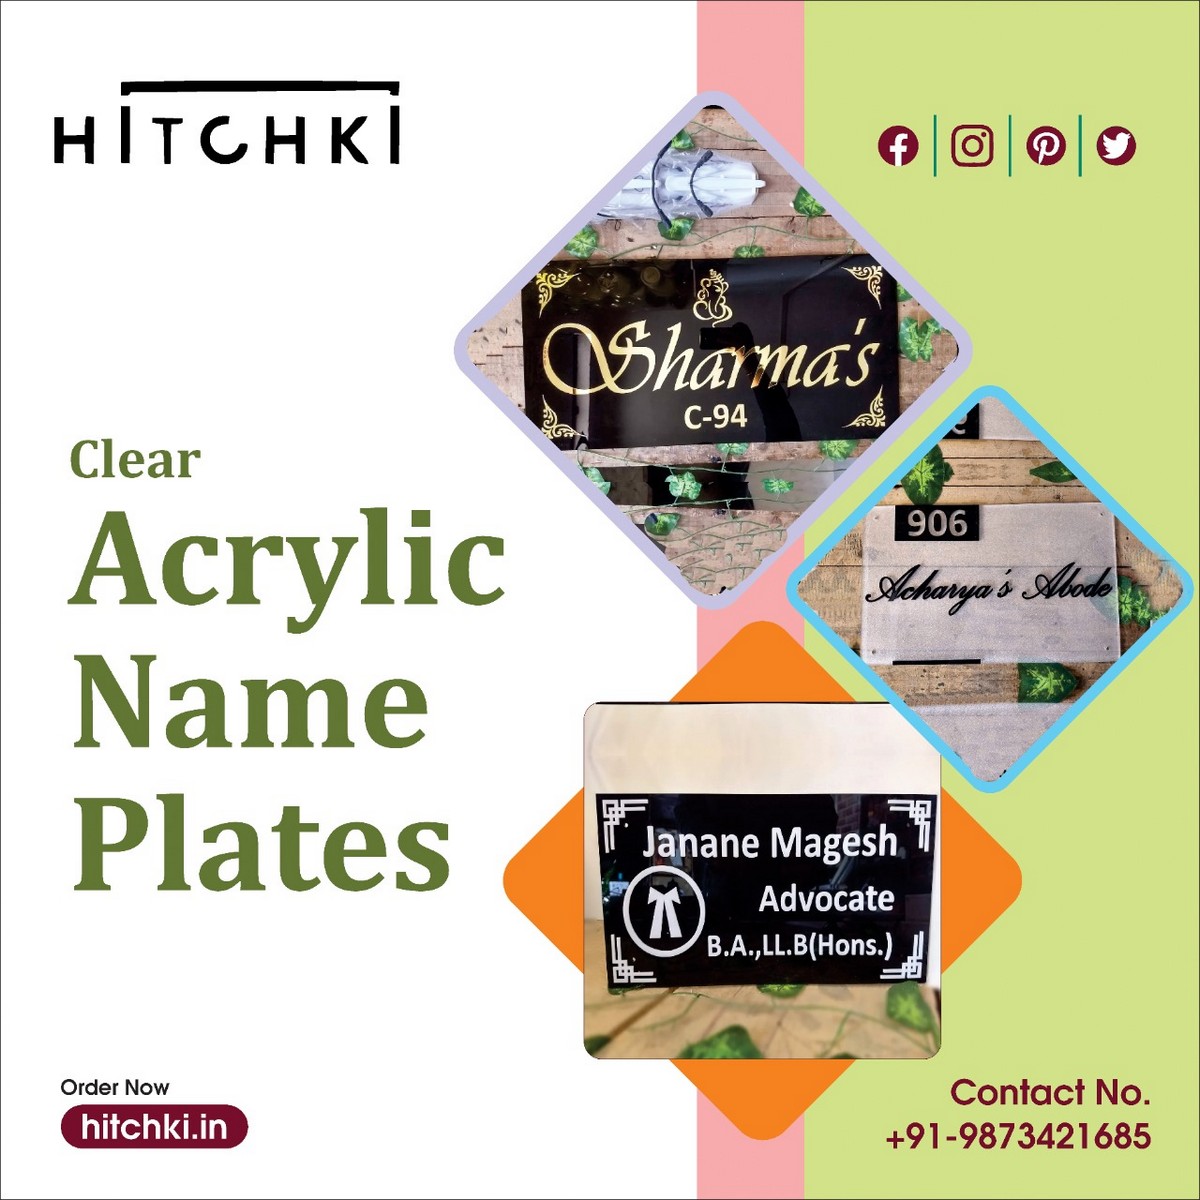 Clear Acrylic Name Plate Hitchki 